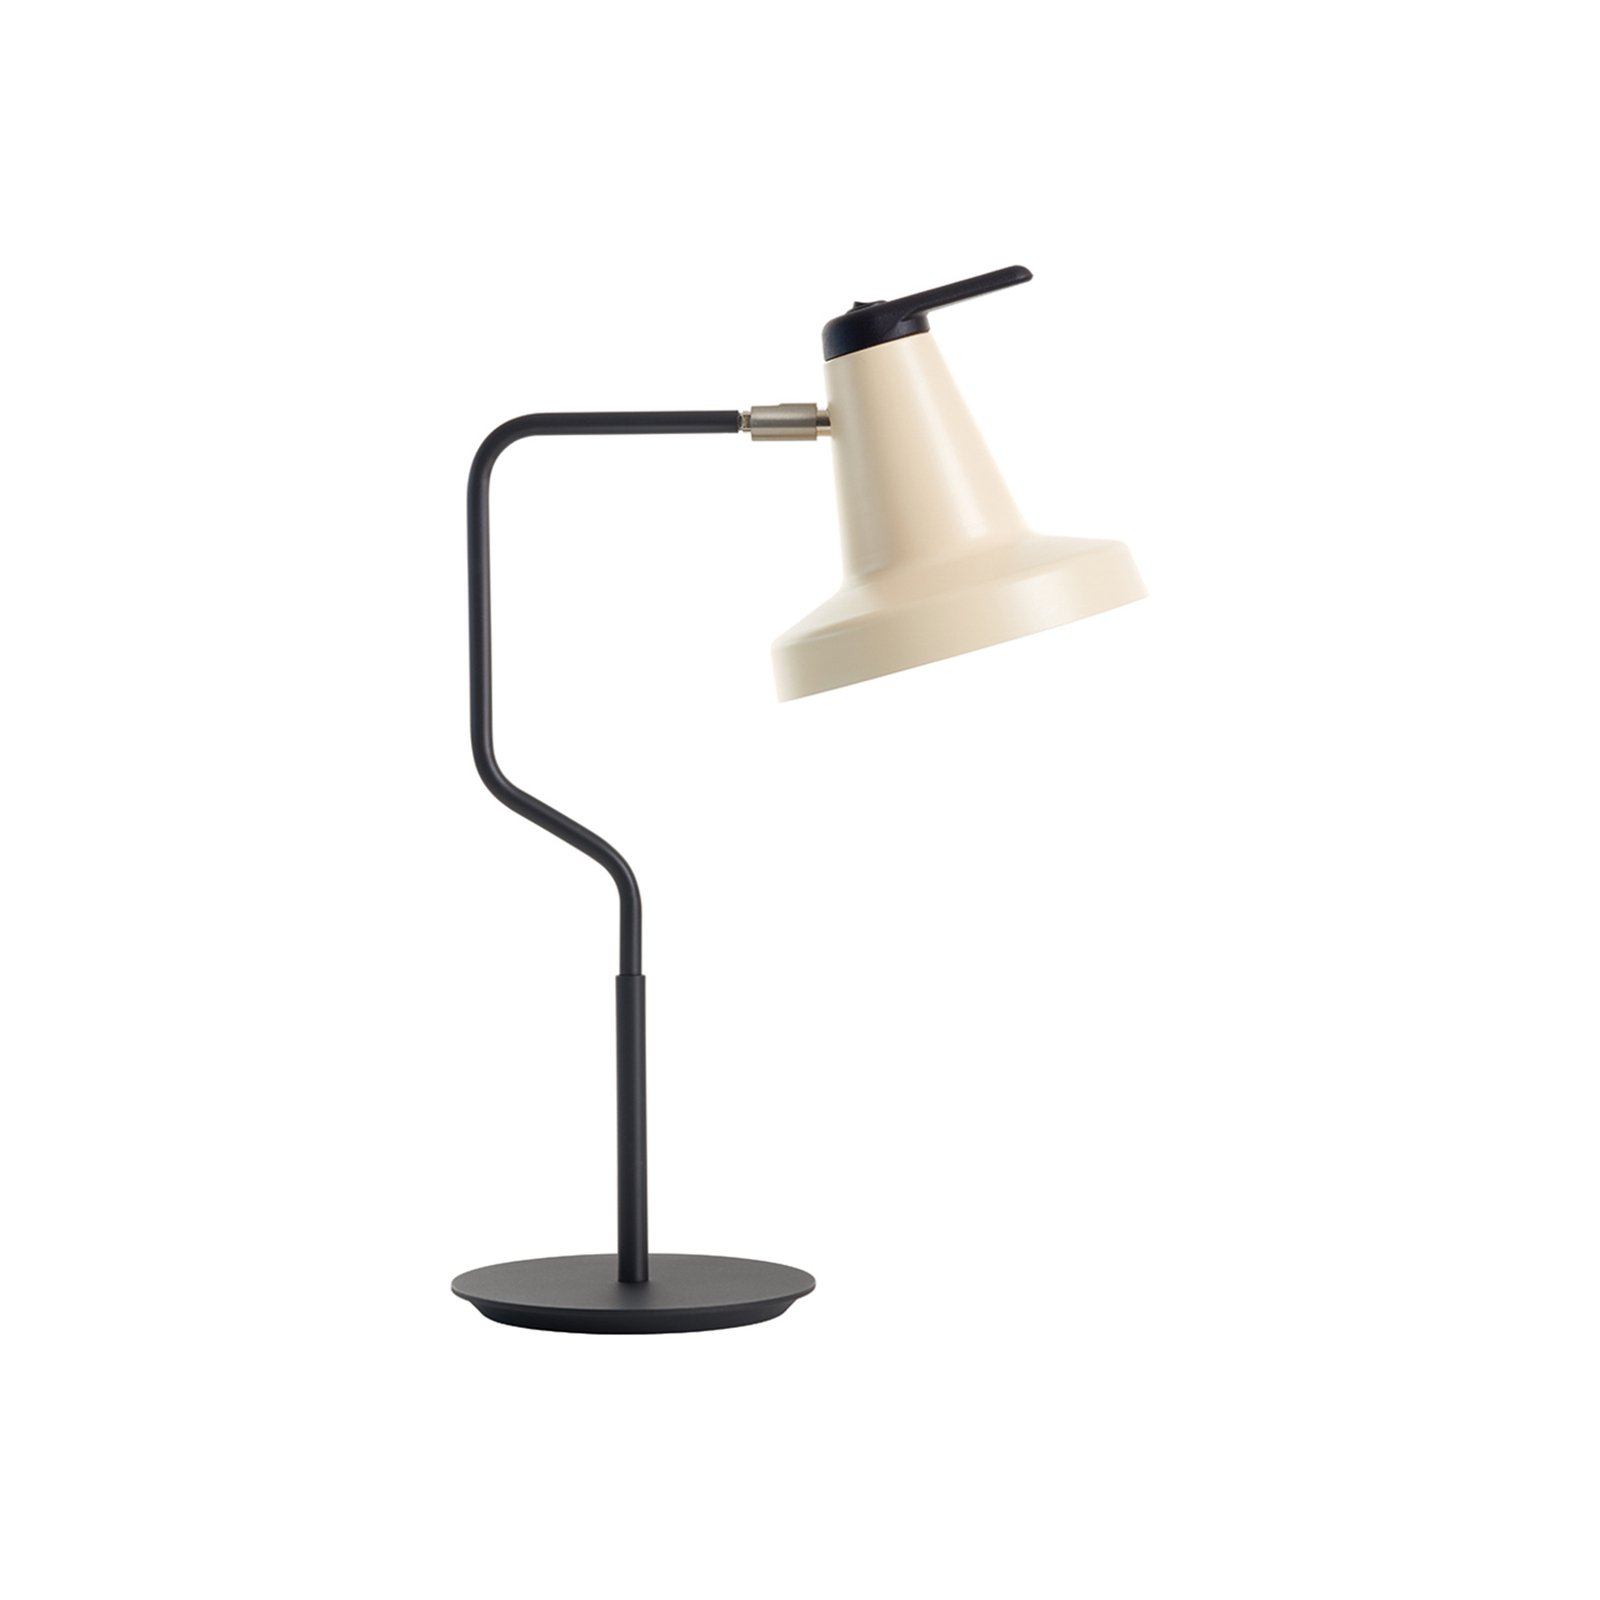 Garçon bordslampa, justerbar skärm beige/svart